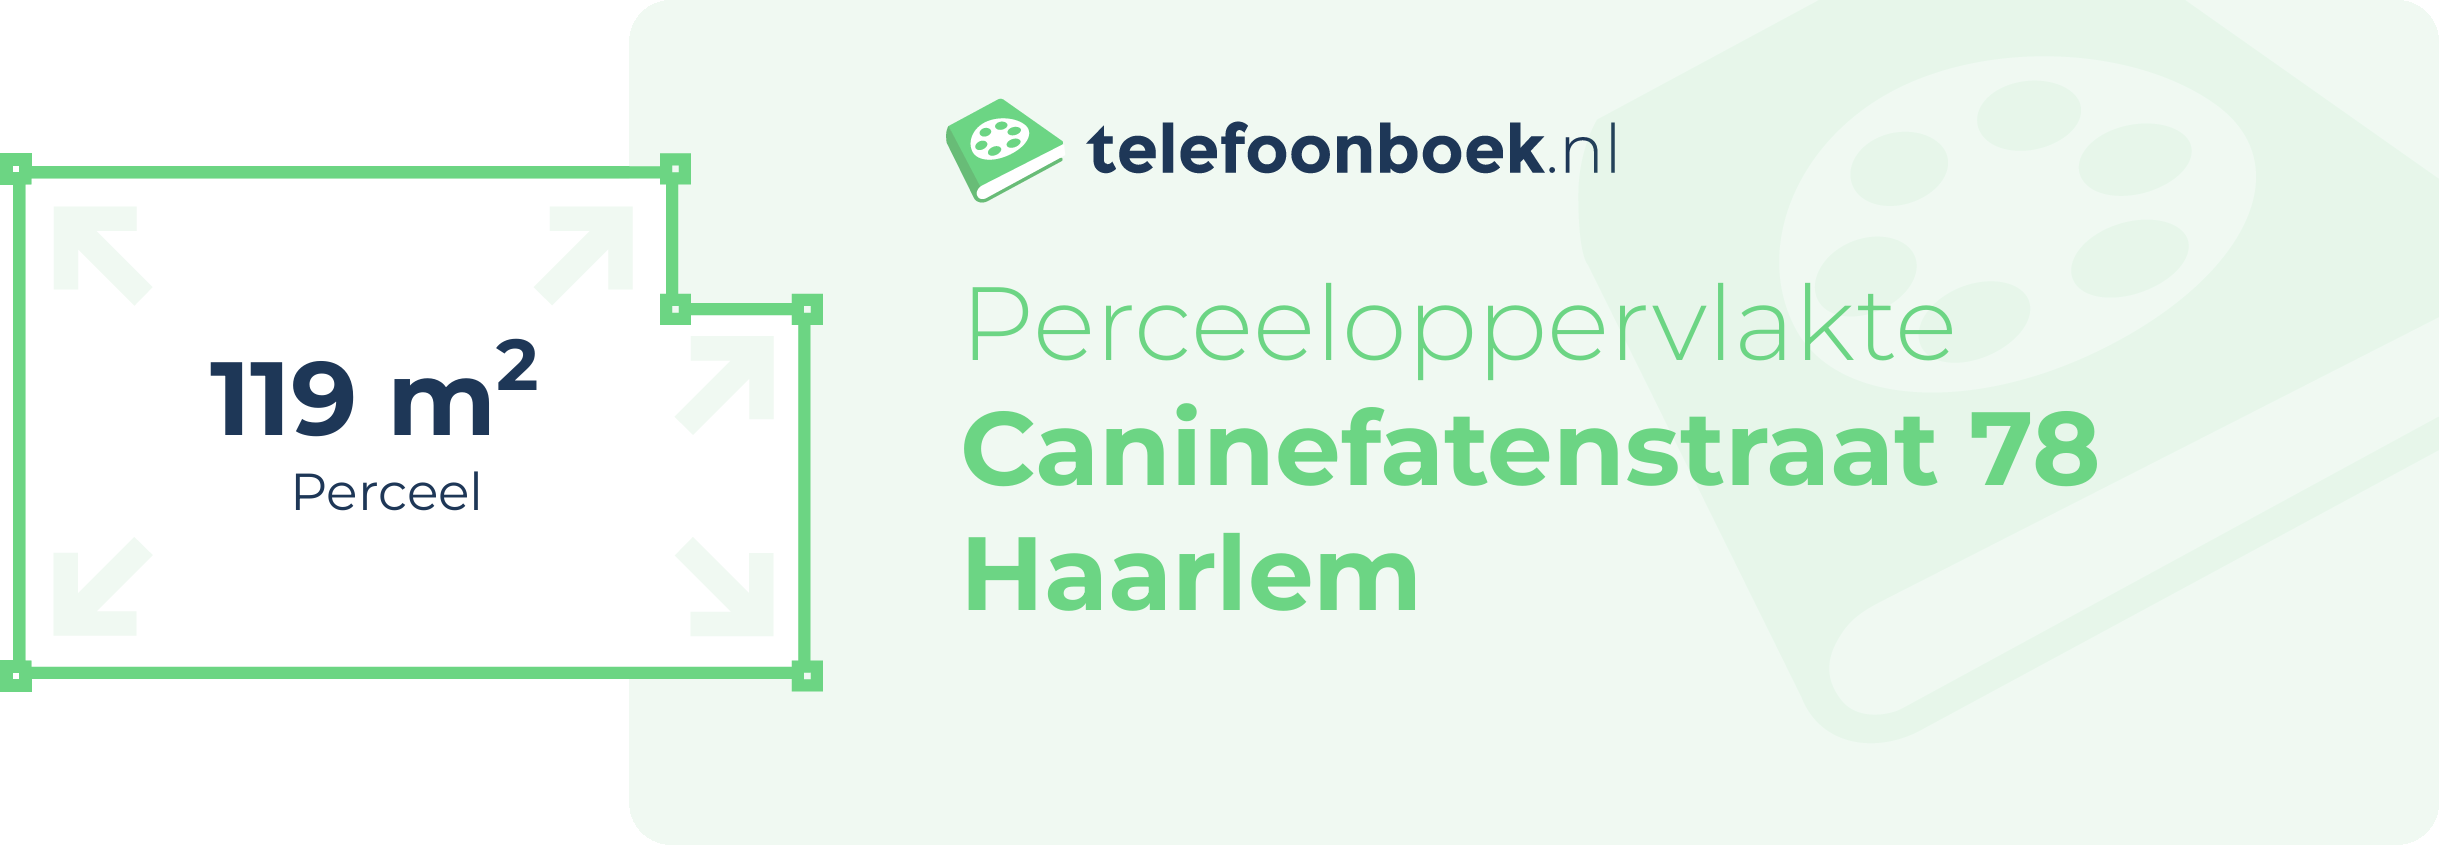 Perceeloppervlakte Caninefatenstraat 78 Haarlem